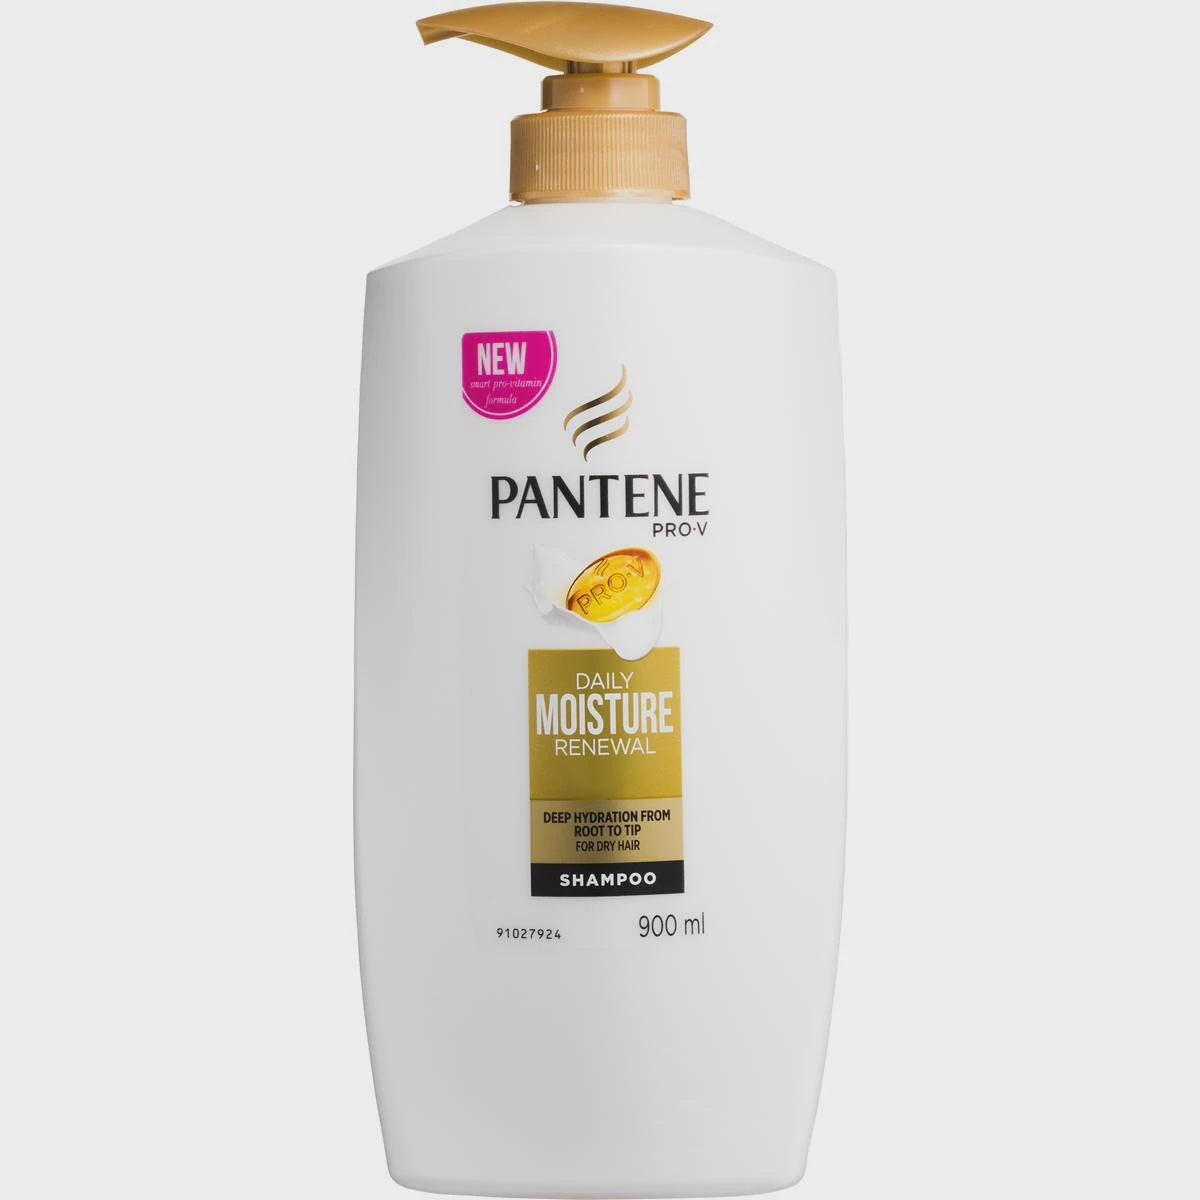 Pantene Shampoo Daily Moisture Renewal 900Ml